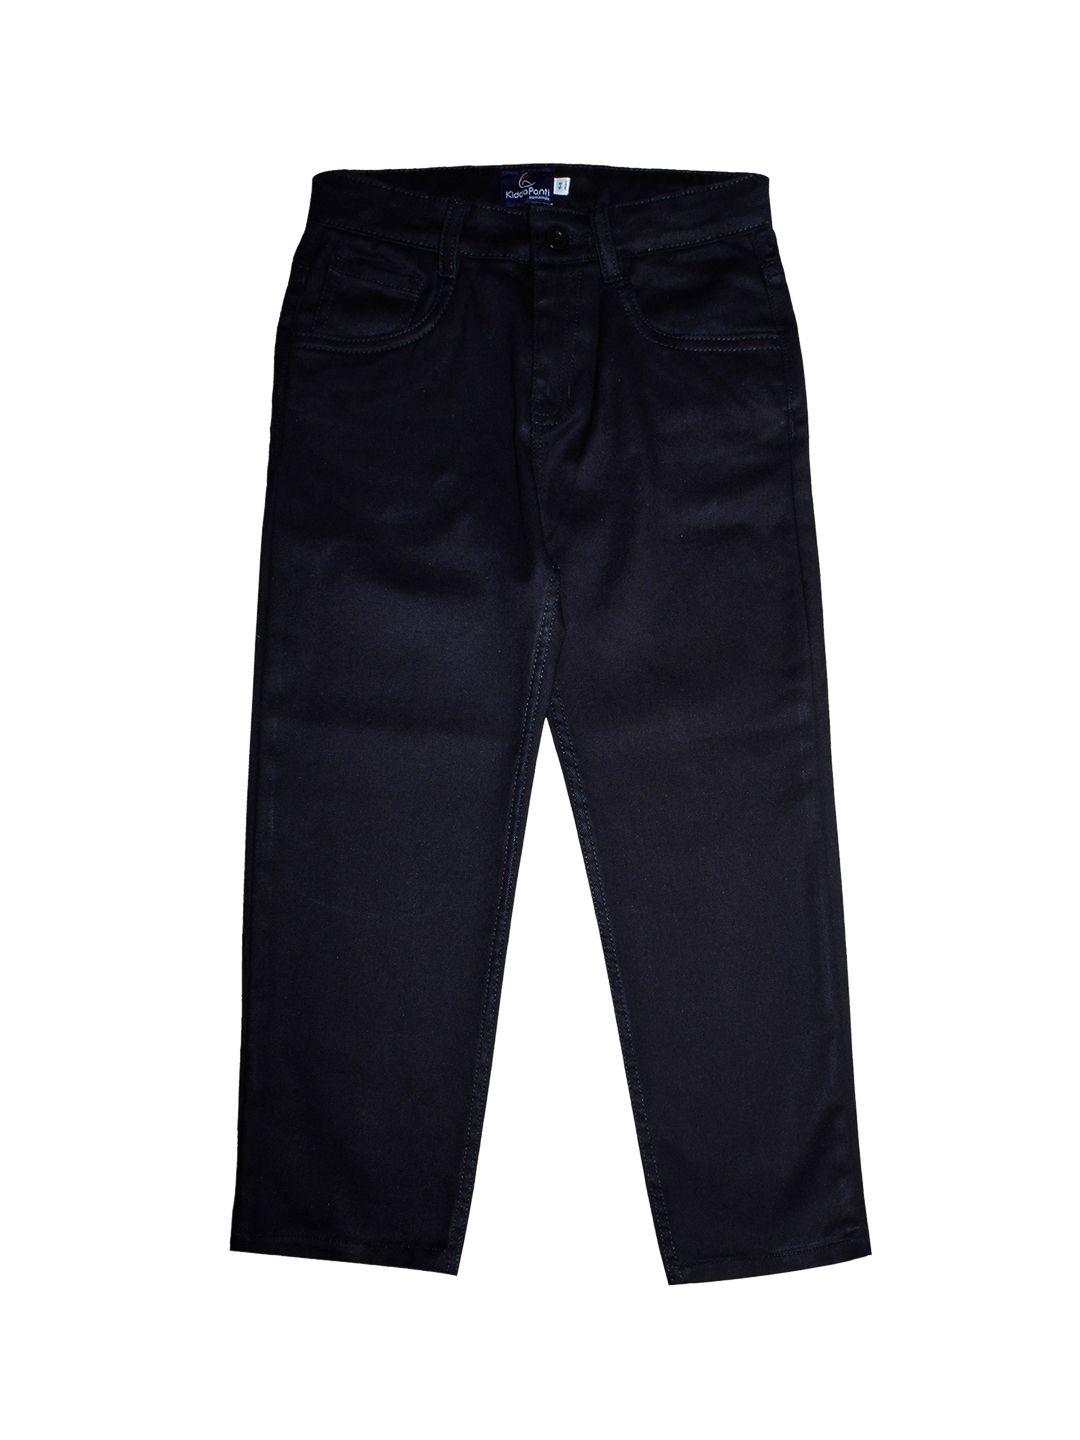 kiddopanti boys black regular fit casual trousers